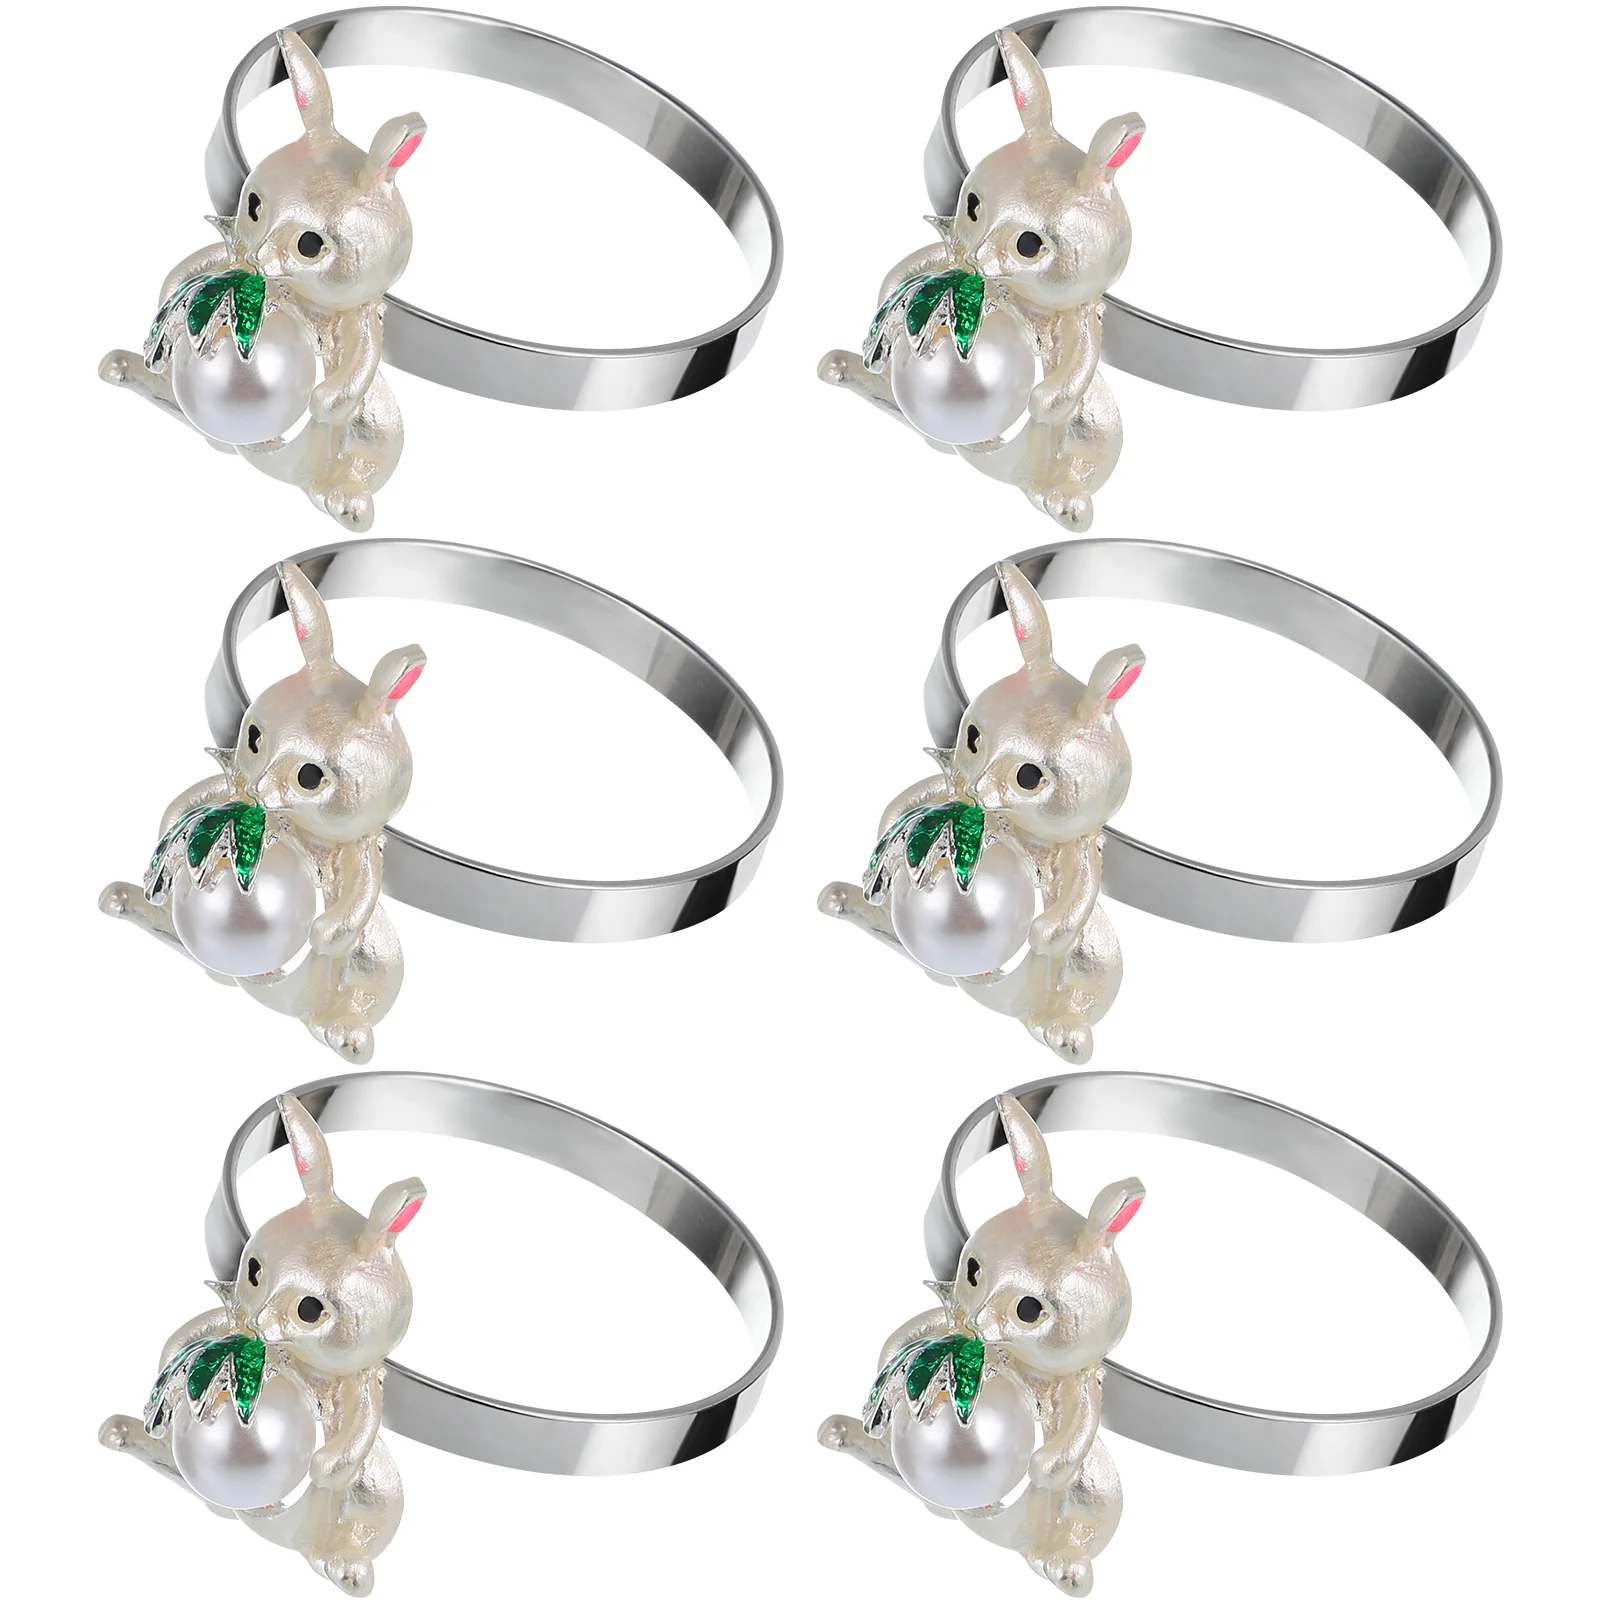 

Reusable Adorable Cute Bunny Napkin Rings Enamel Rabbit Napkin Holder for Easter Dinner Weddings Party Table Decorations